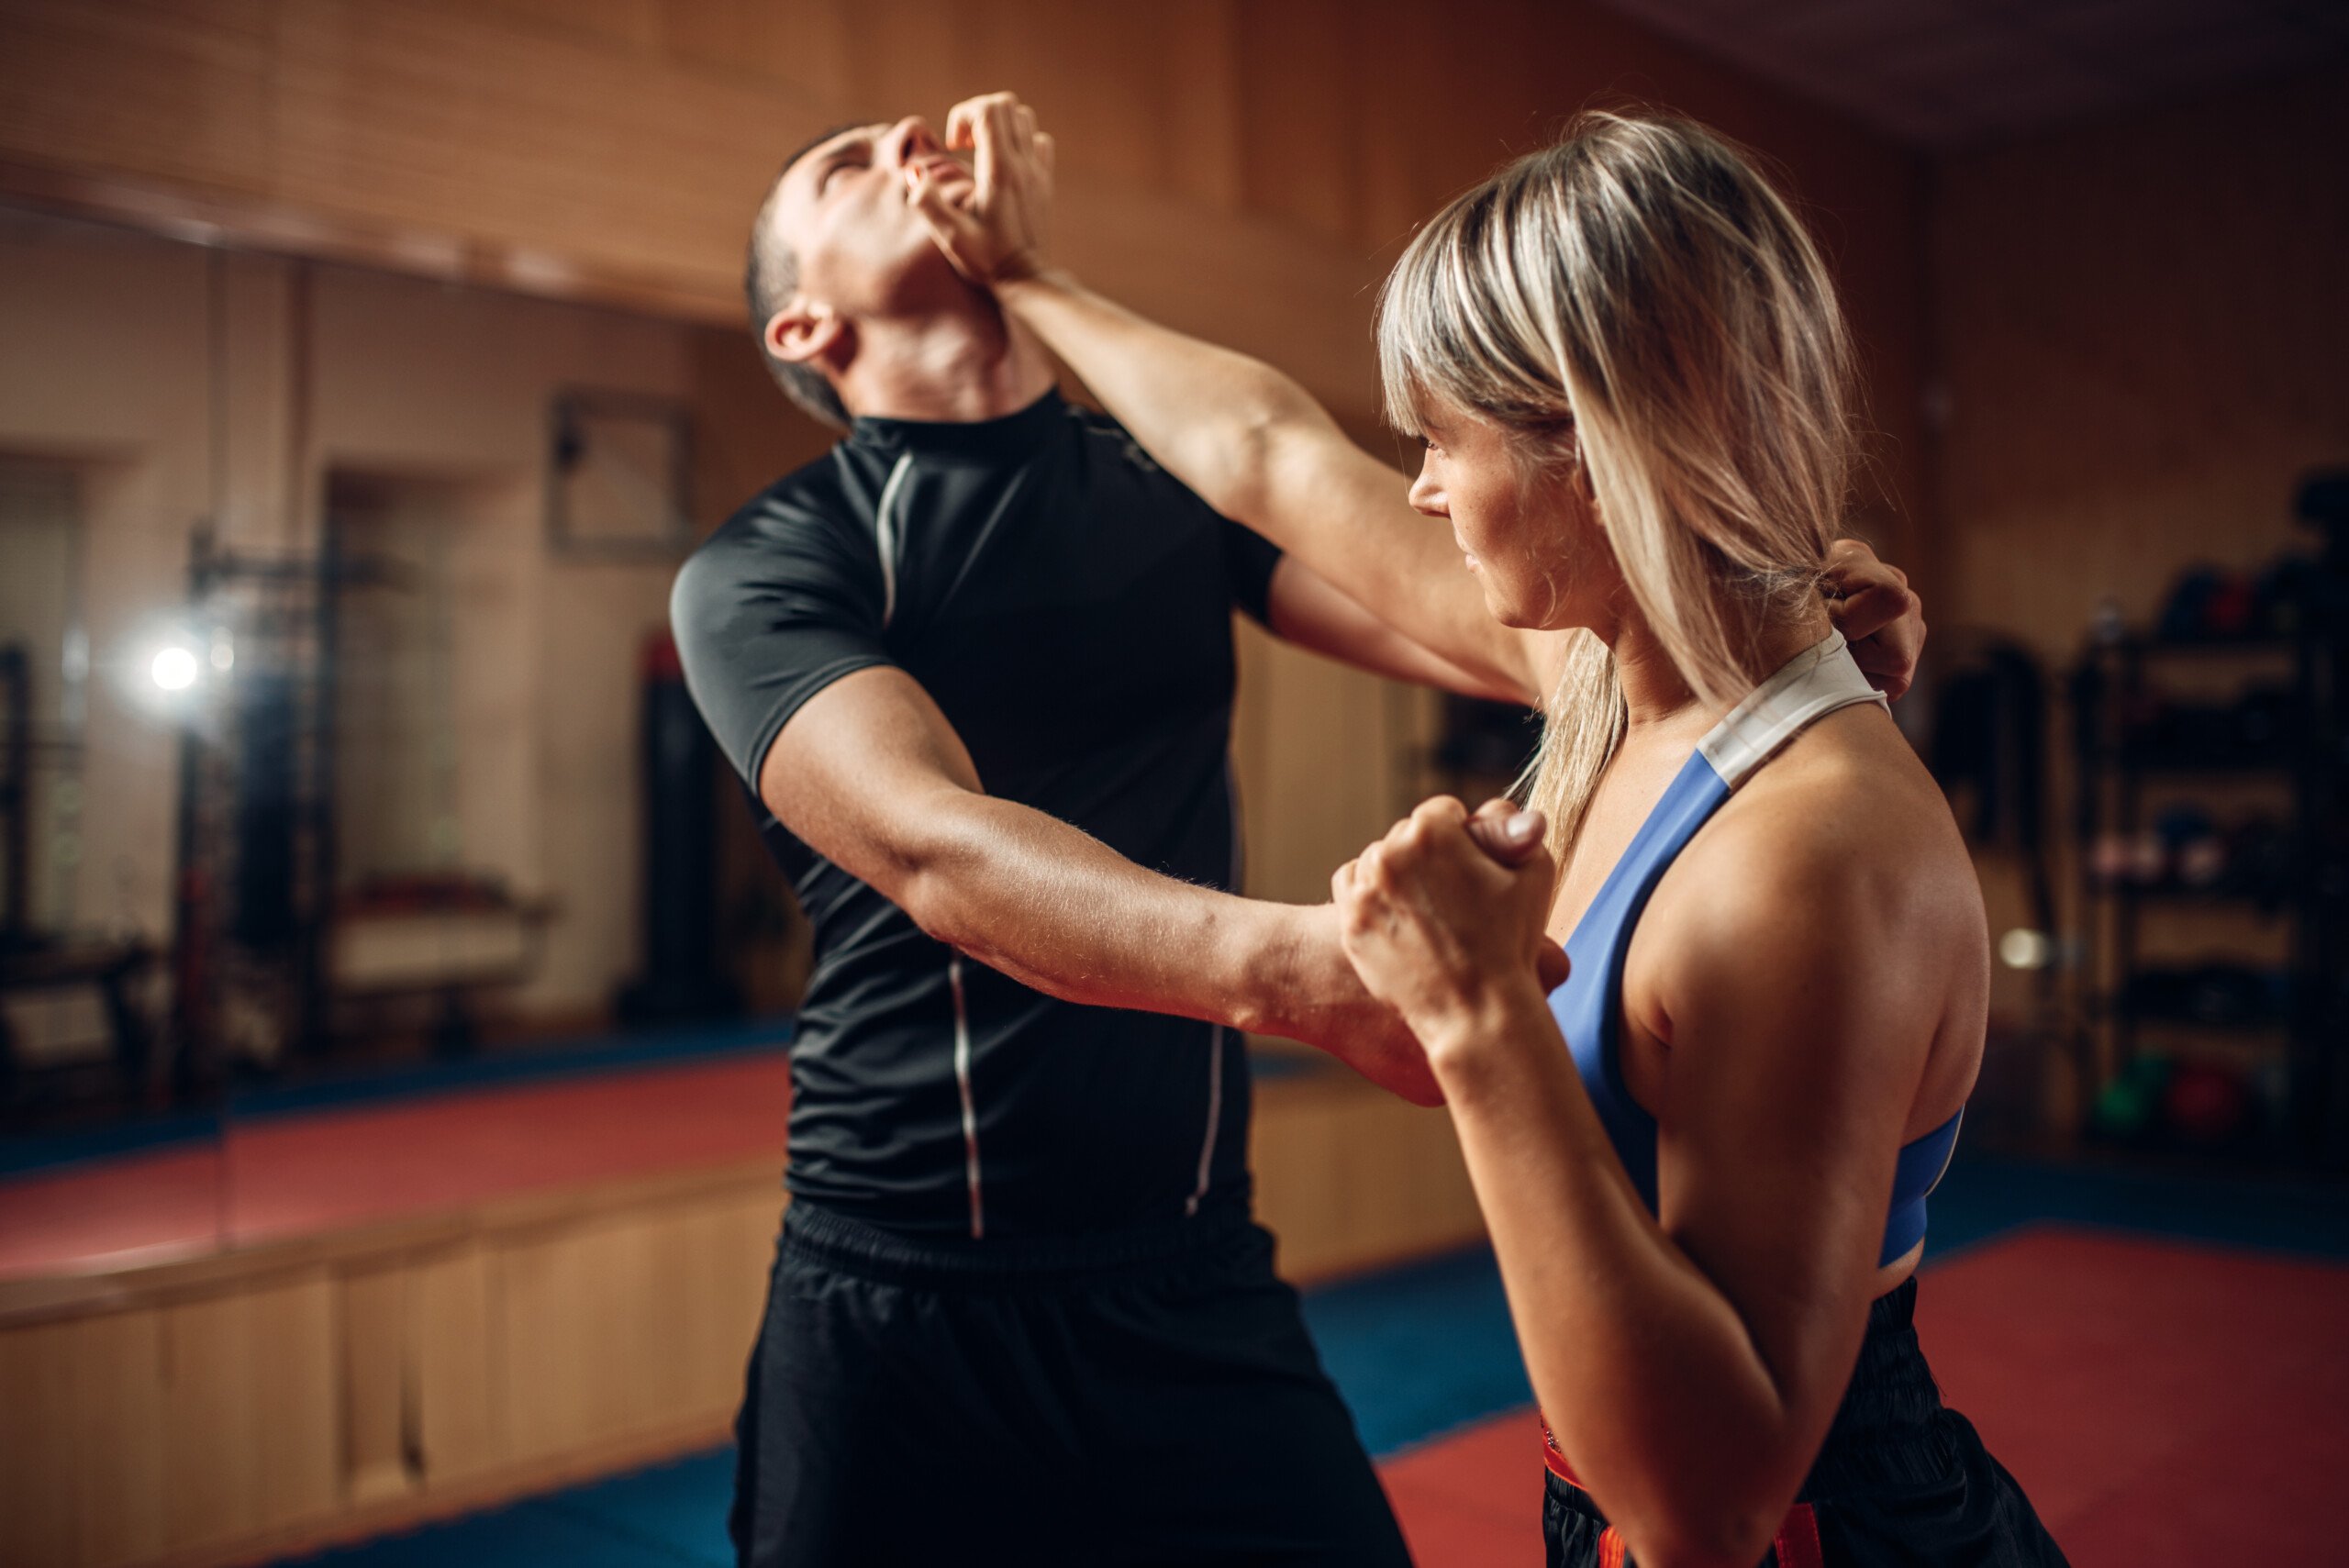 self defense moves for women